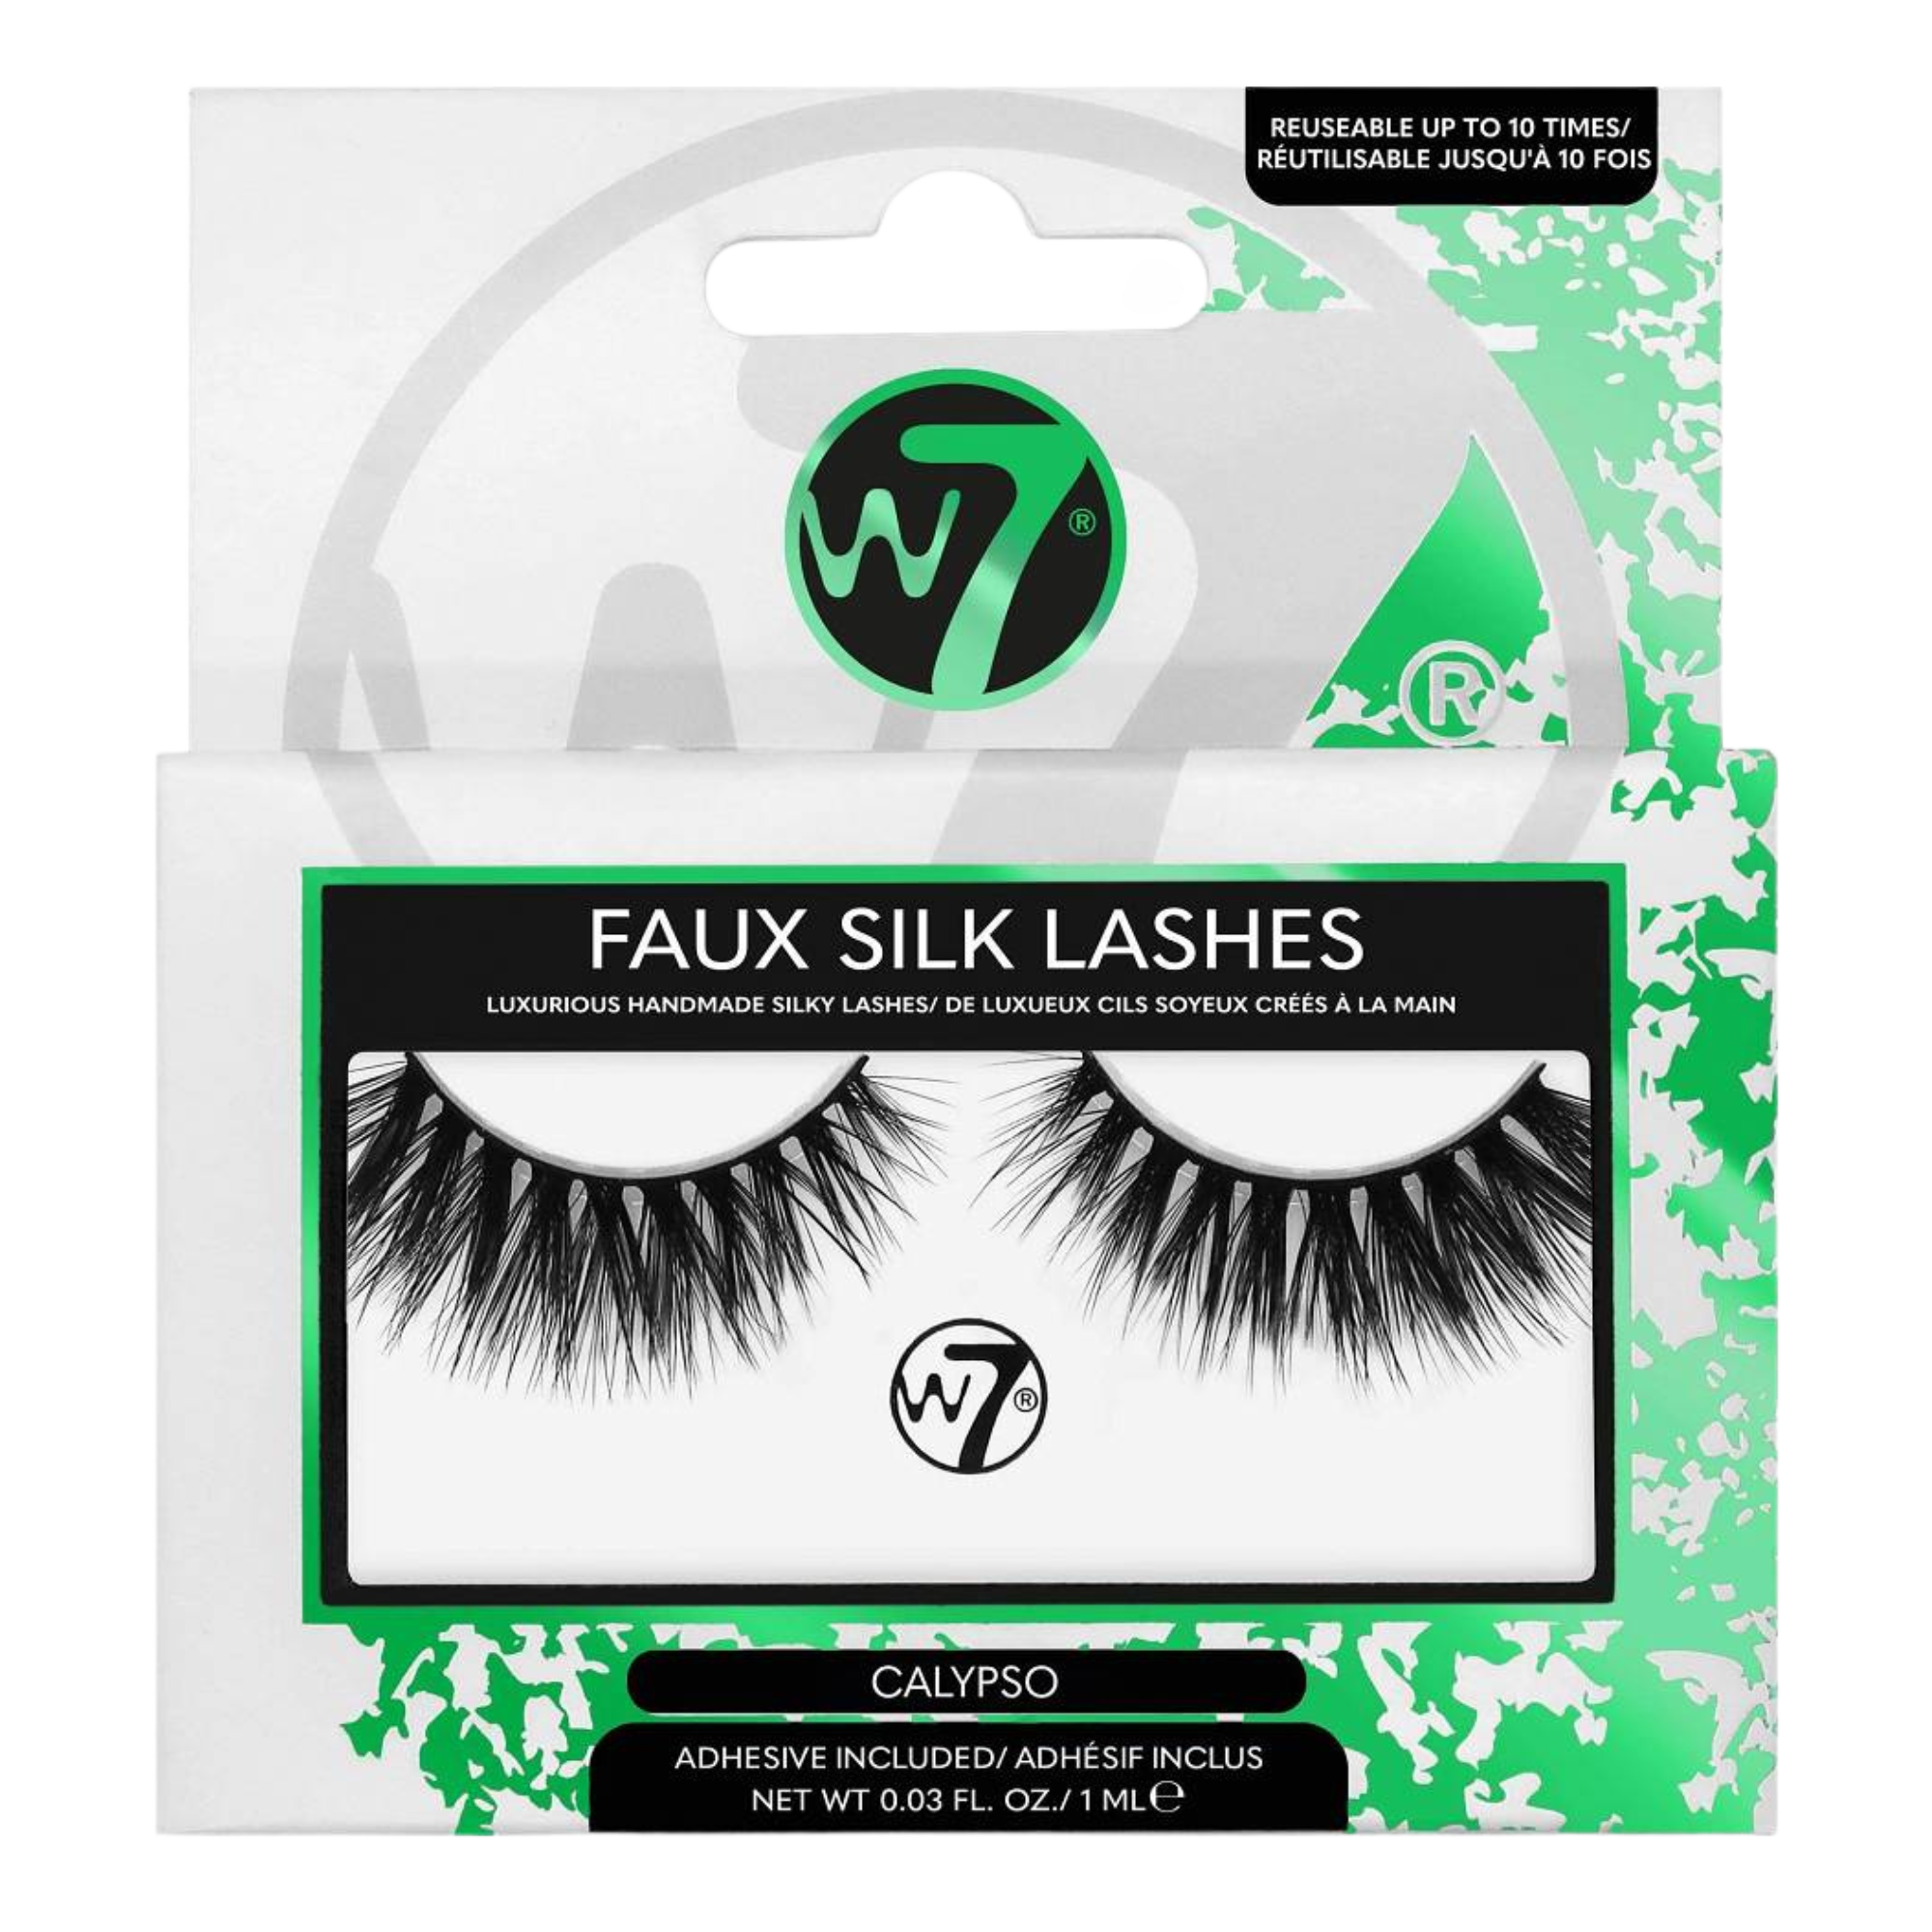 W7 3D Faux Silk Накладные ресницы Calypso, 2 шт./1 упаковка.